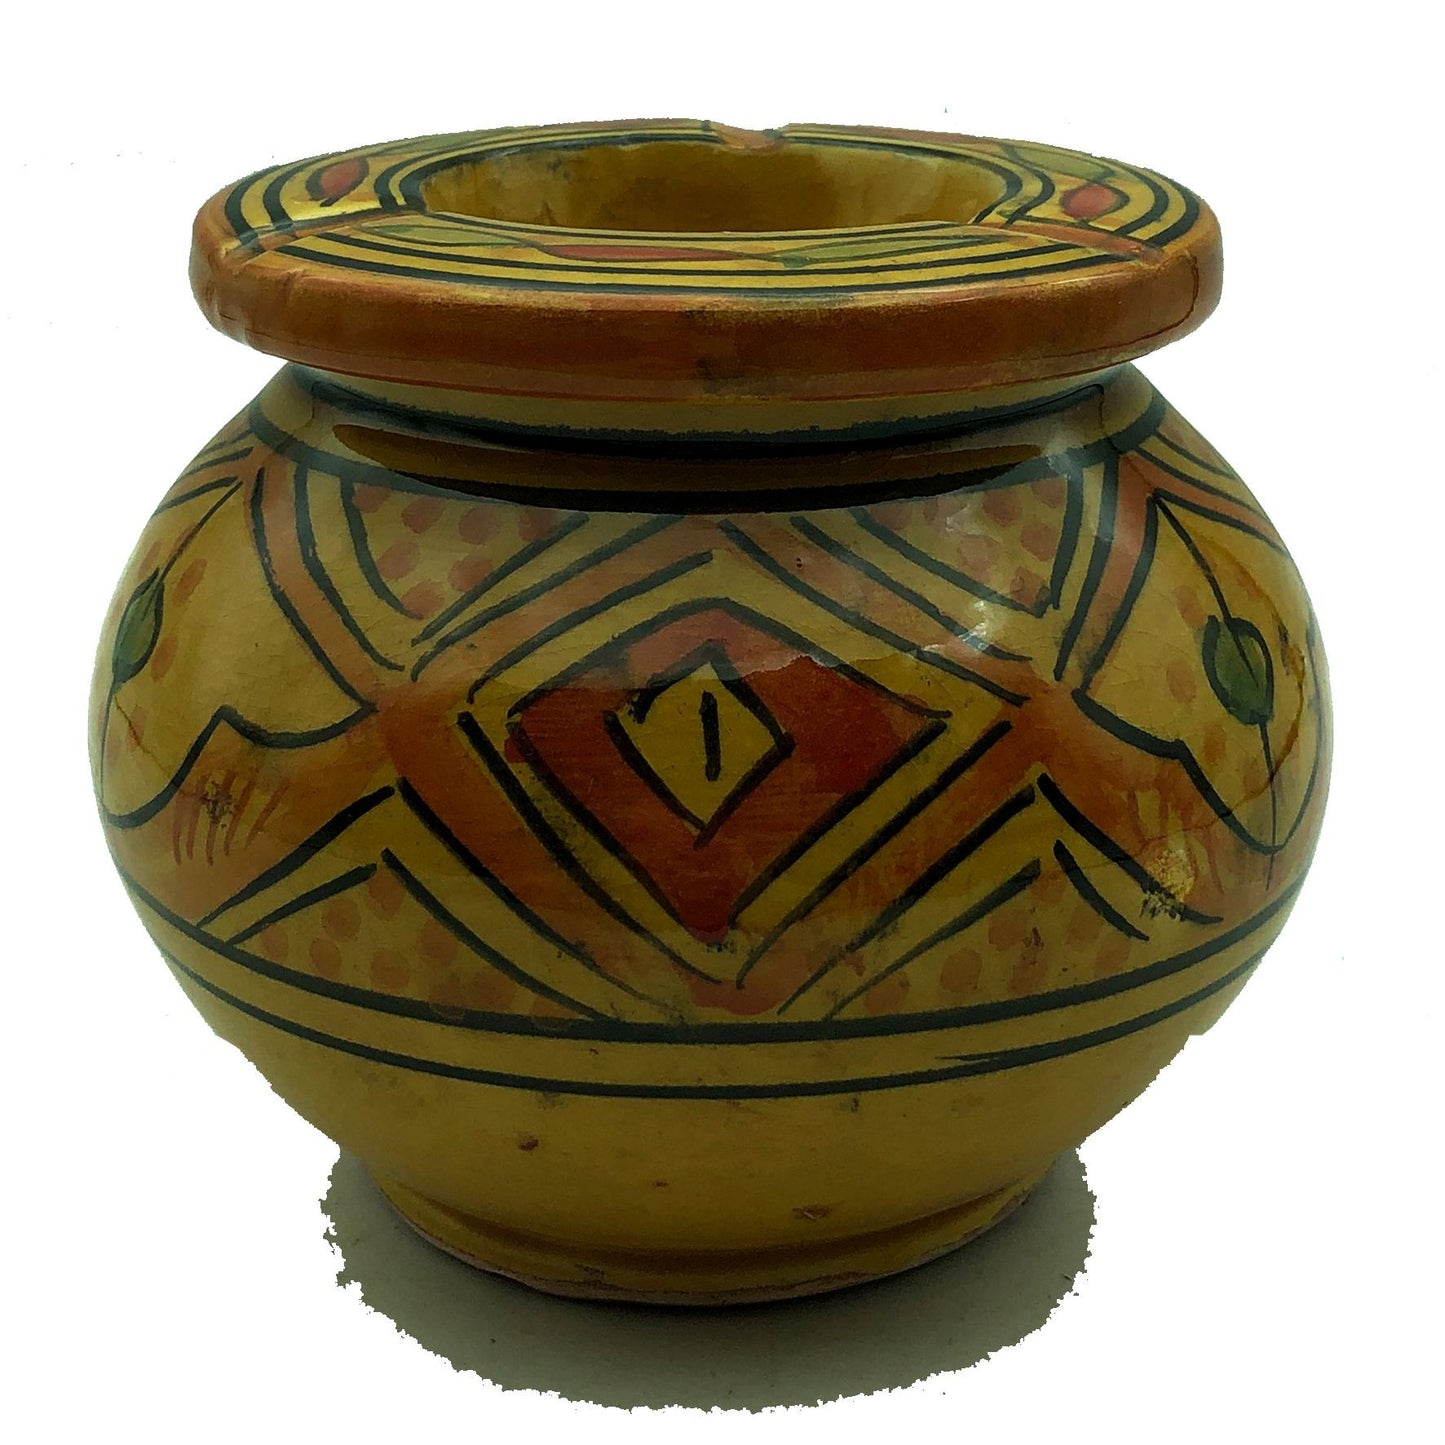 Etnico Arredo Posacenere Ceramica Antiodore Terre Cuite Marocchina 1604211016